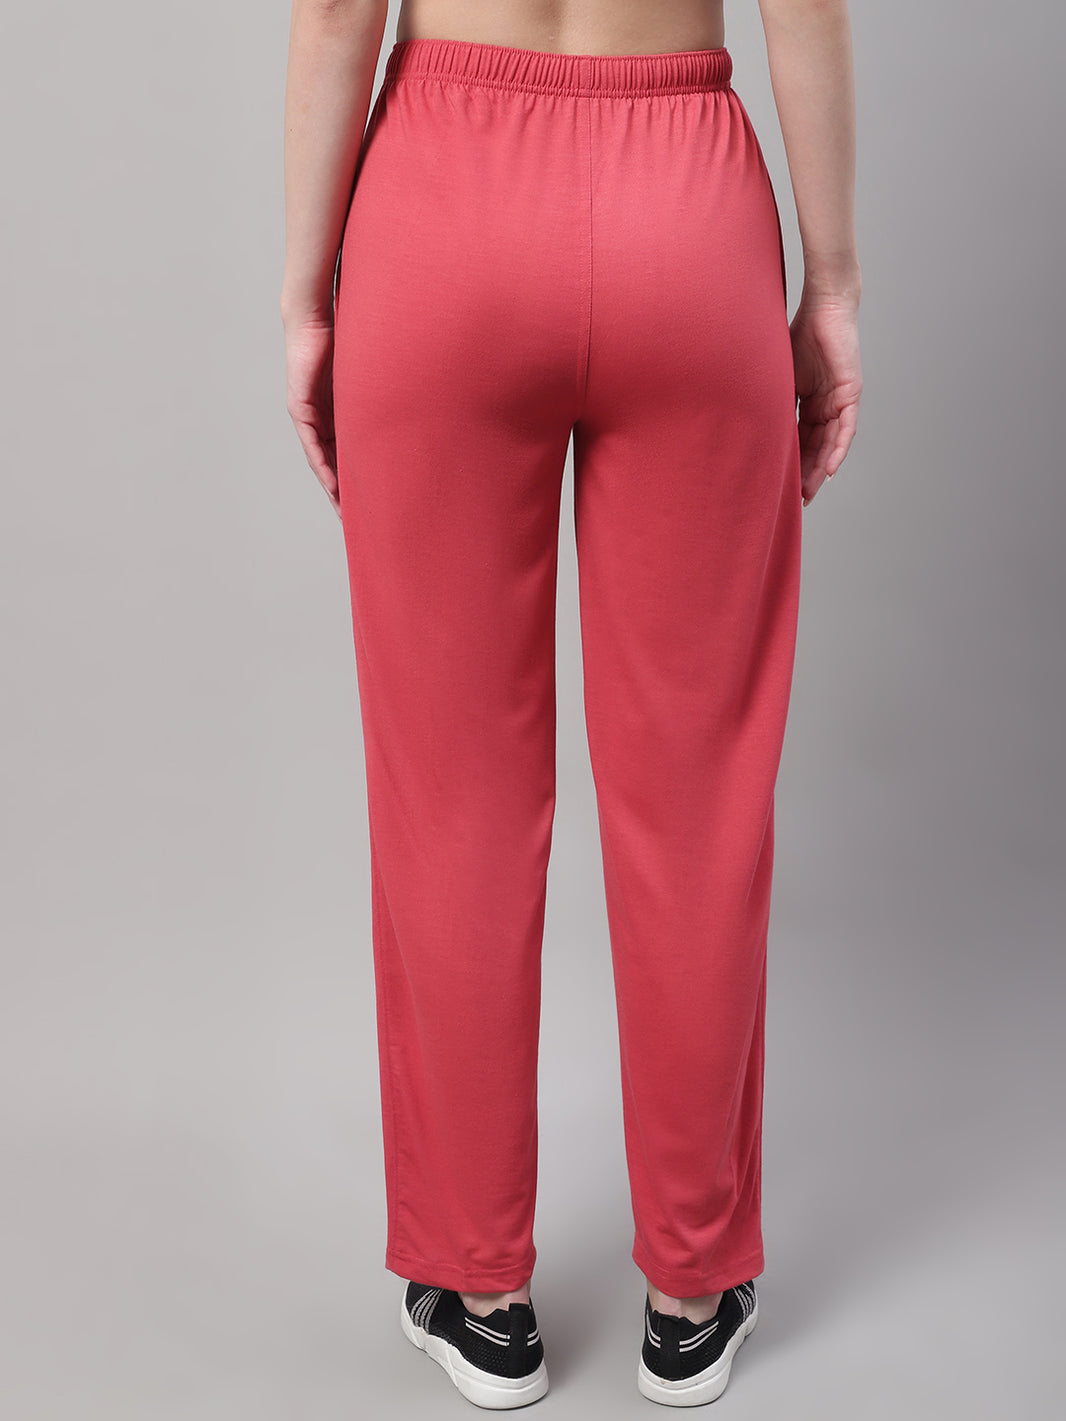 Vimal Jonney Pink Regular fit Cotton Trackpant for Women(Zip of 1 Side Pocket)